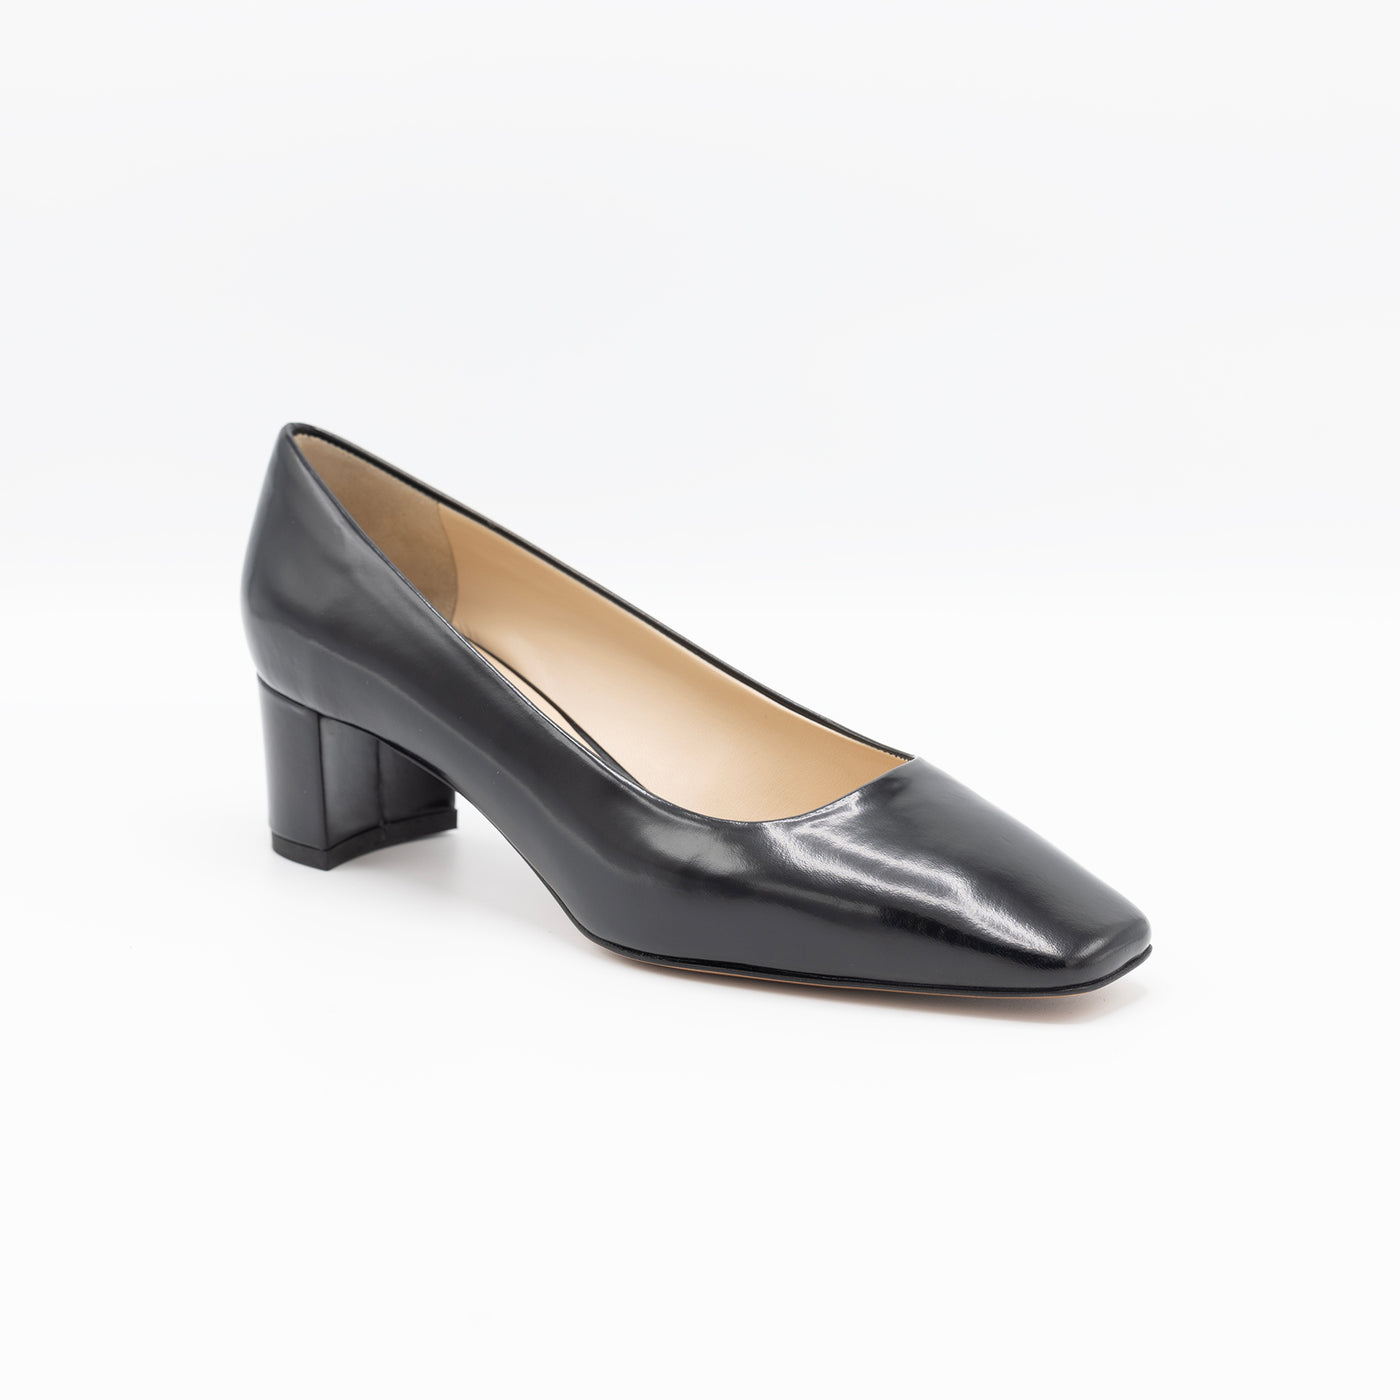 Square toe black patent pump with block heel. Leather soles. 